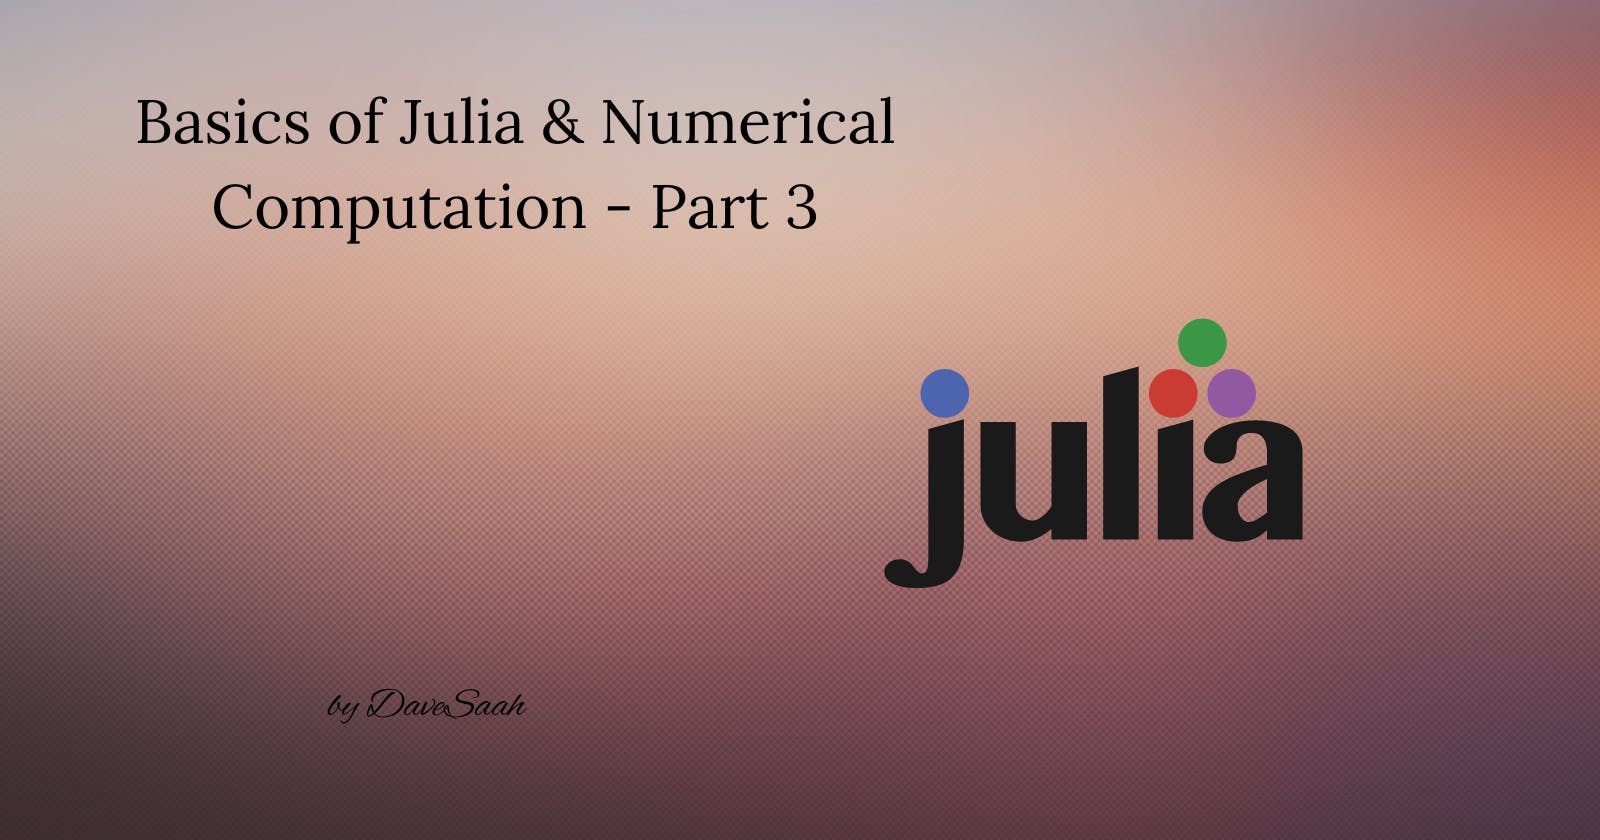 Basics of Julia & Numerical Computation - Part 3